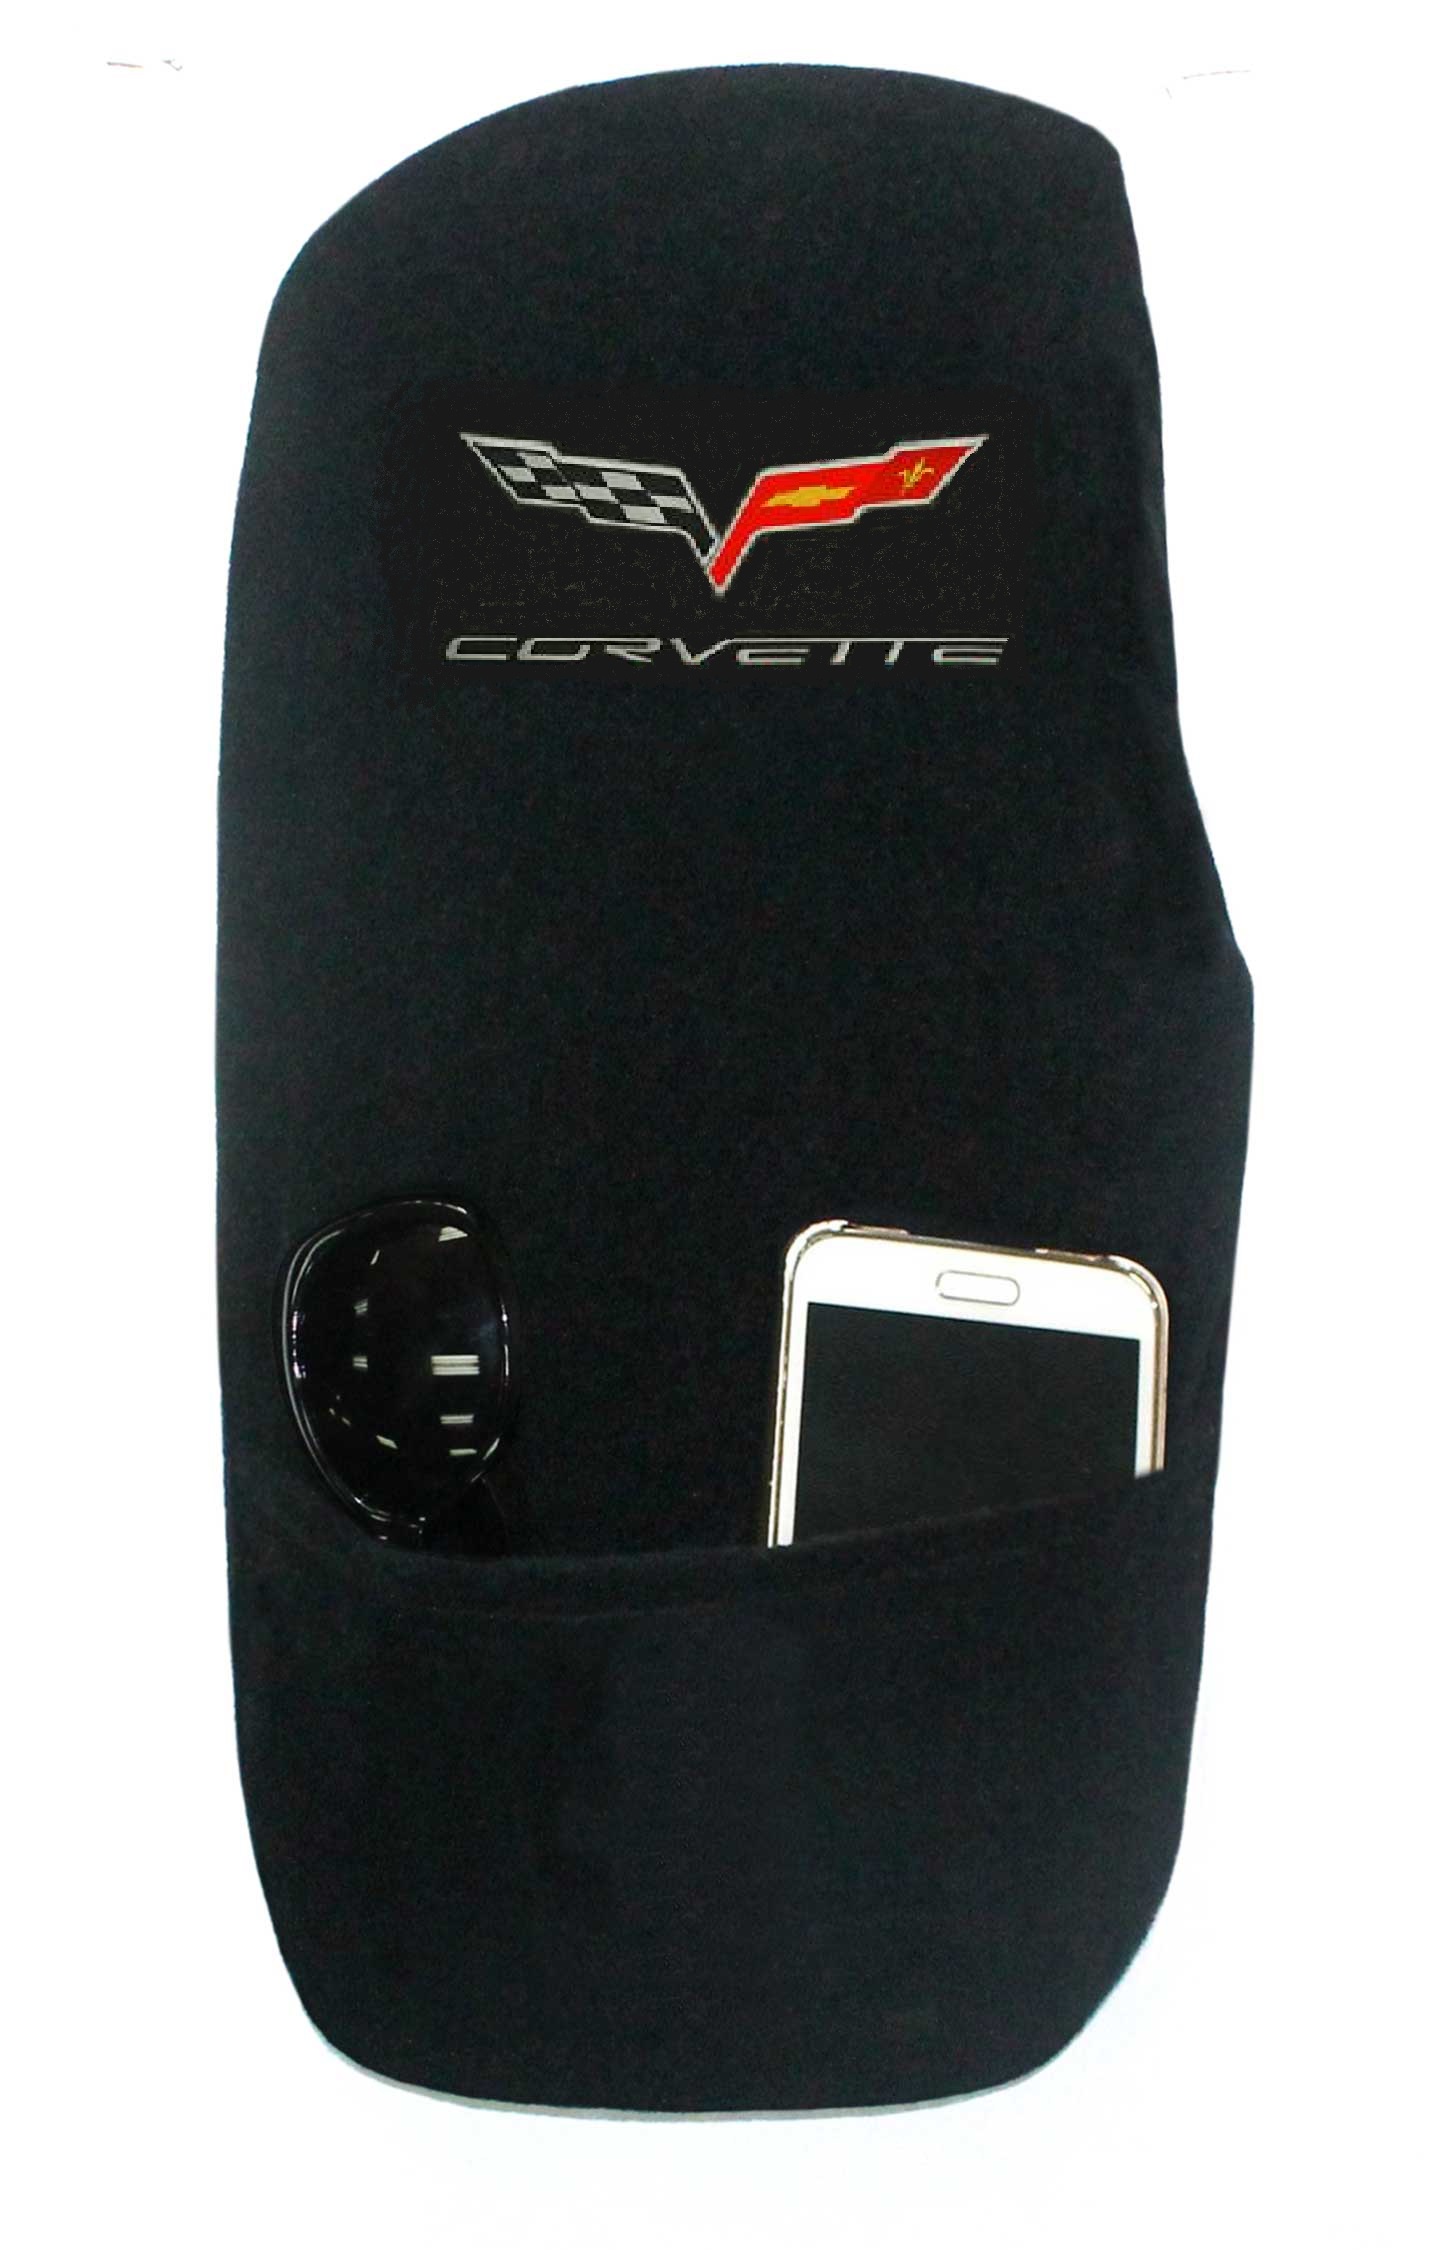 C6 Corvette Embroidered Emblem Center Console Cover